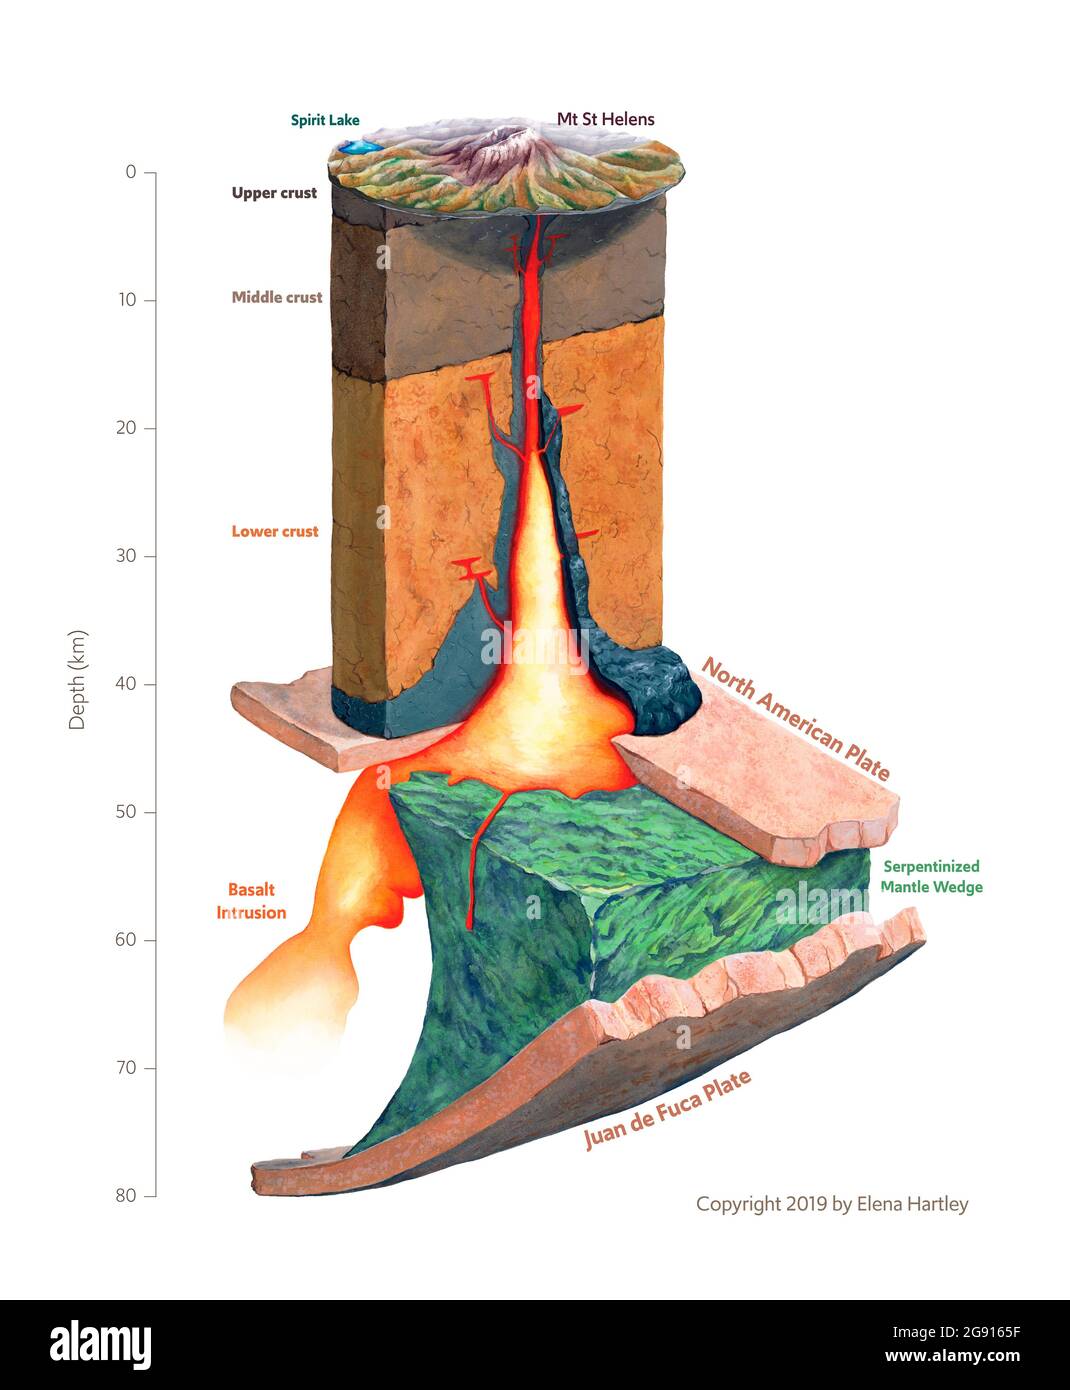 Mt. St. Helens magma plumbing system, illustration Stock Photo